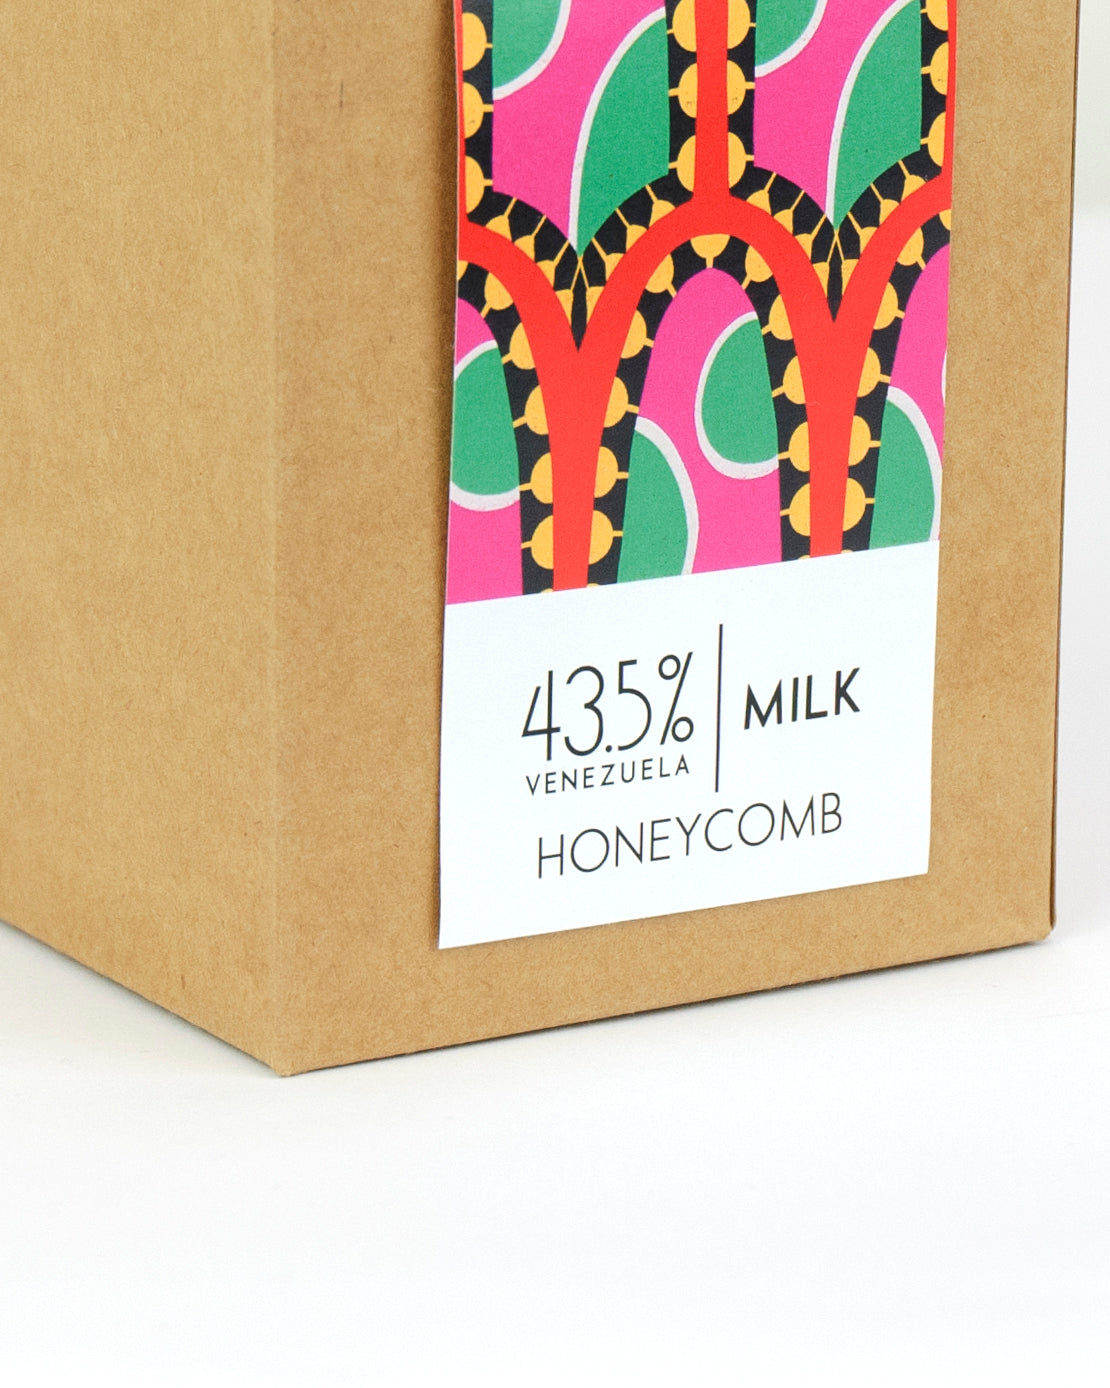 Honeycomb dipped in Milk Chocolate - 43.5% Venezuelan